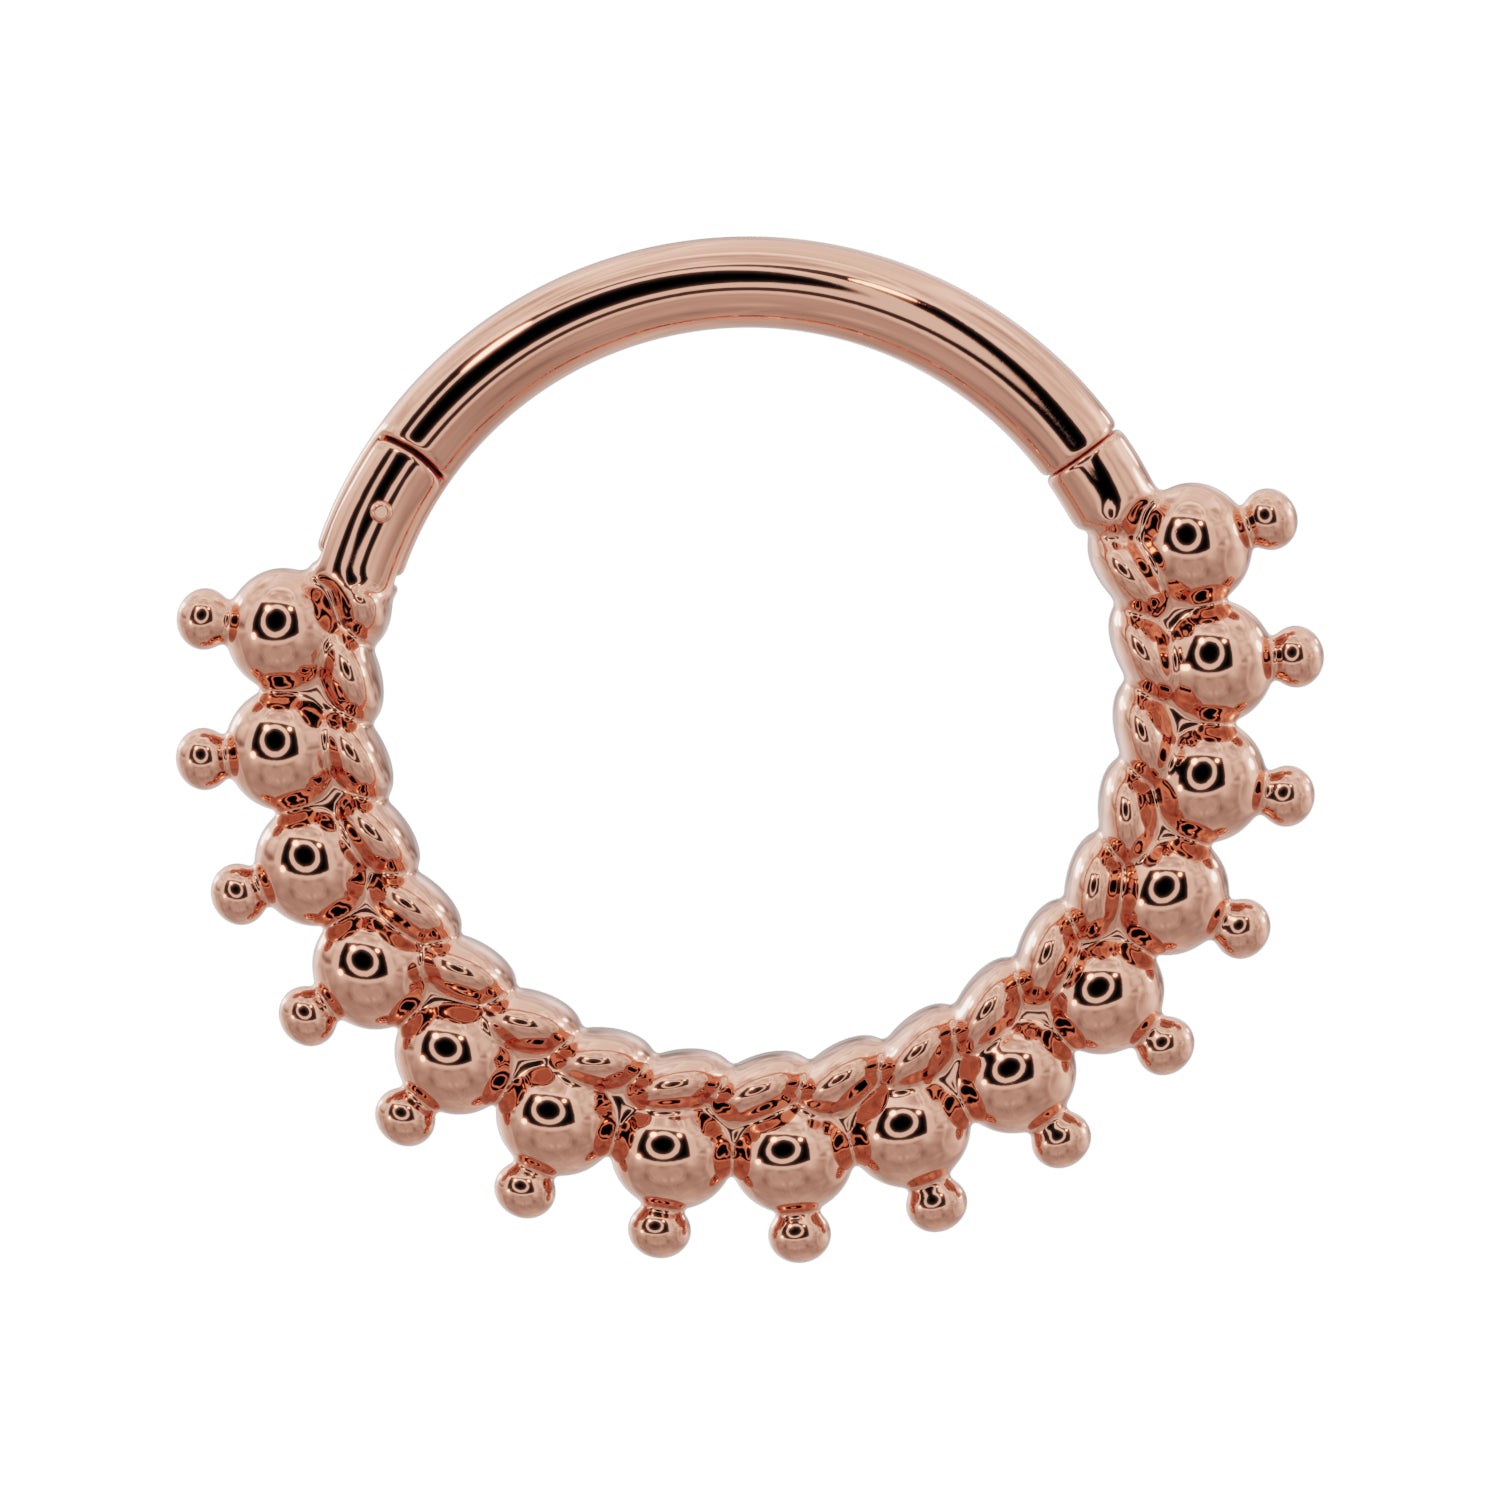 Shala Beads 14k Gold Clicker Ring Hoop-14K Rose Gold   14G (1.6mm)   5 8